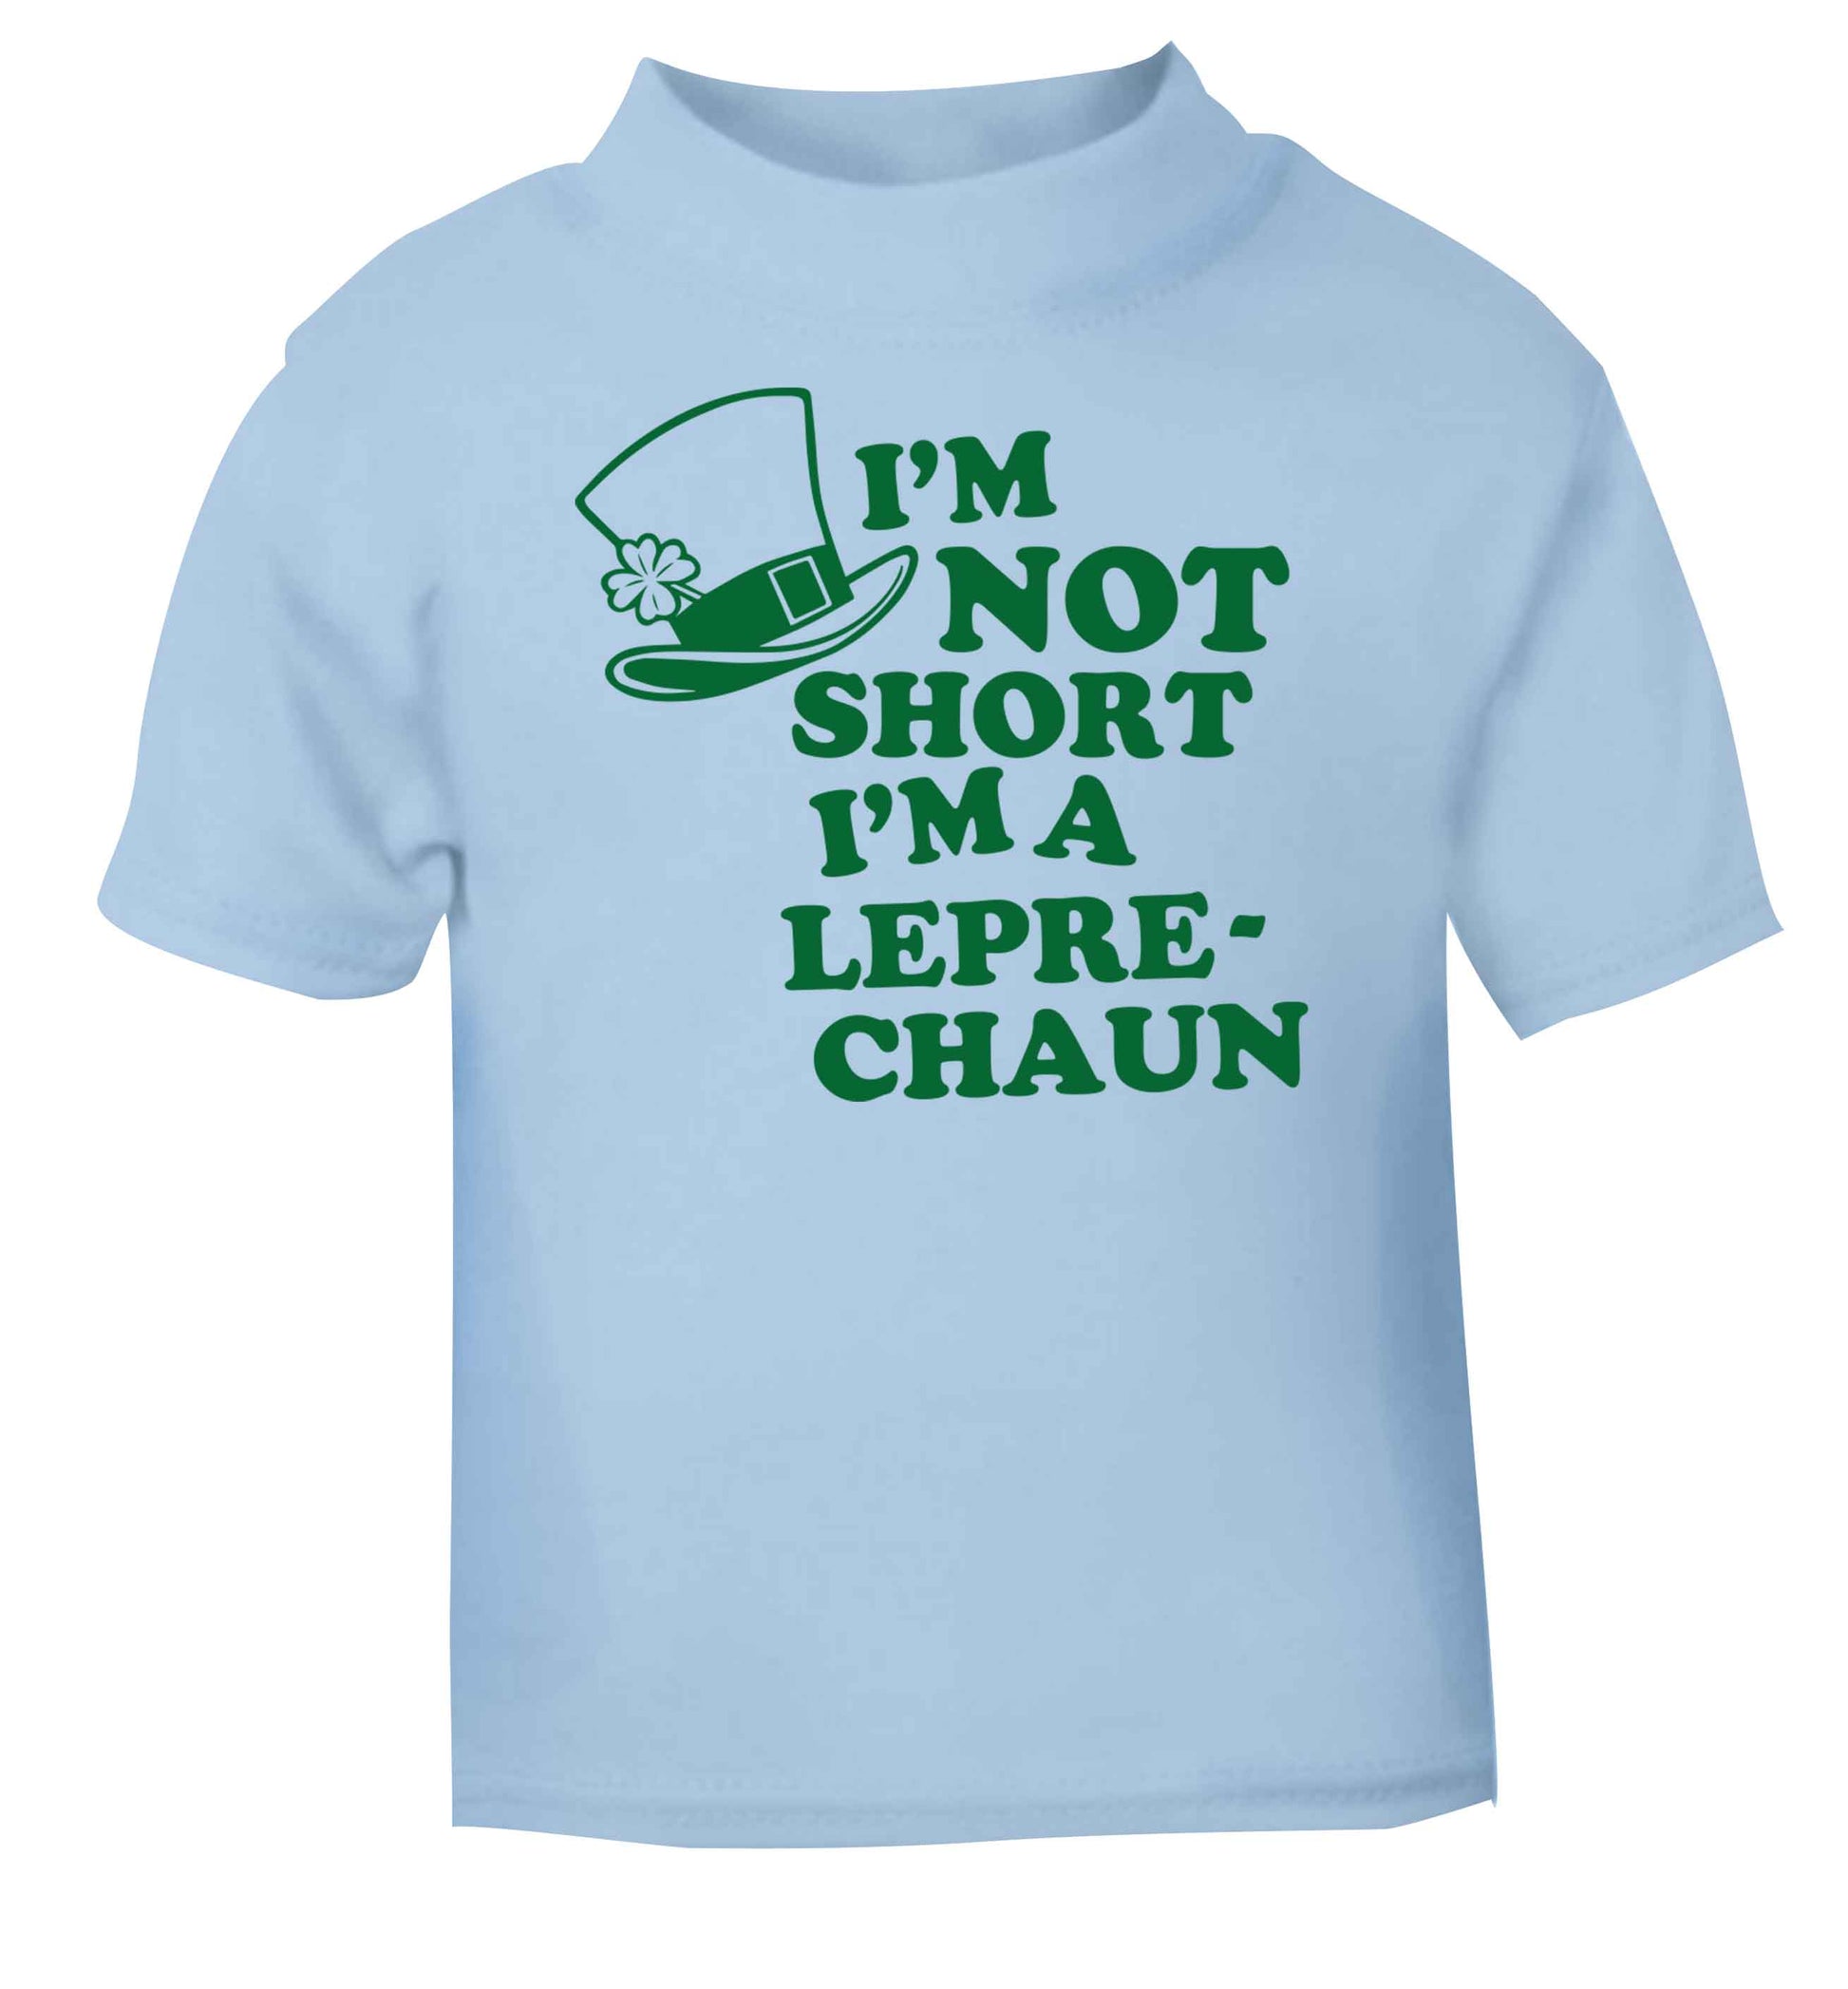 I'm not short I'm a leprechaun light blue baby toddler Tshirt 2 Years